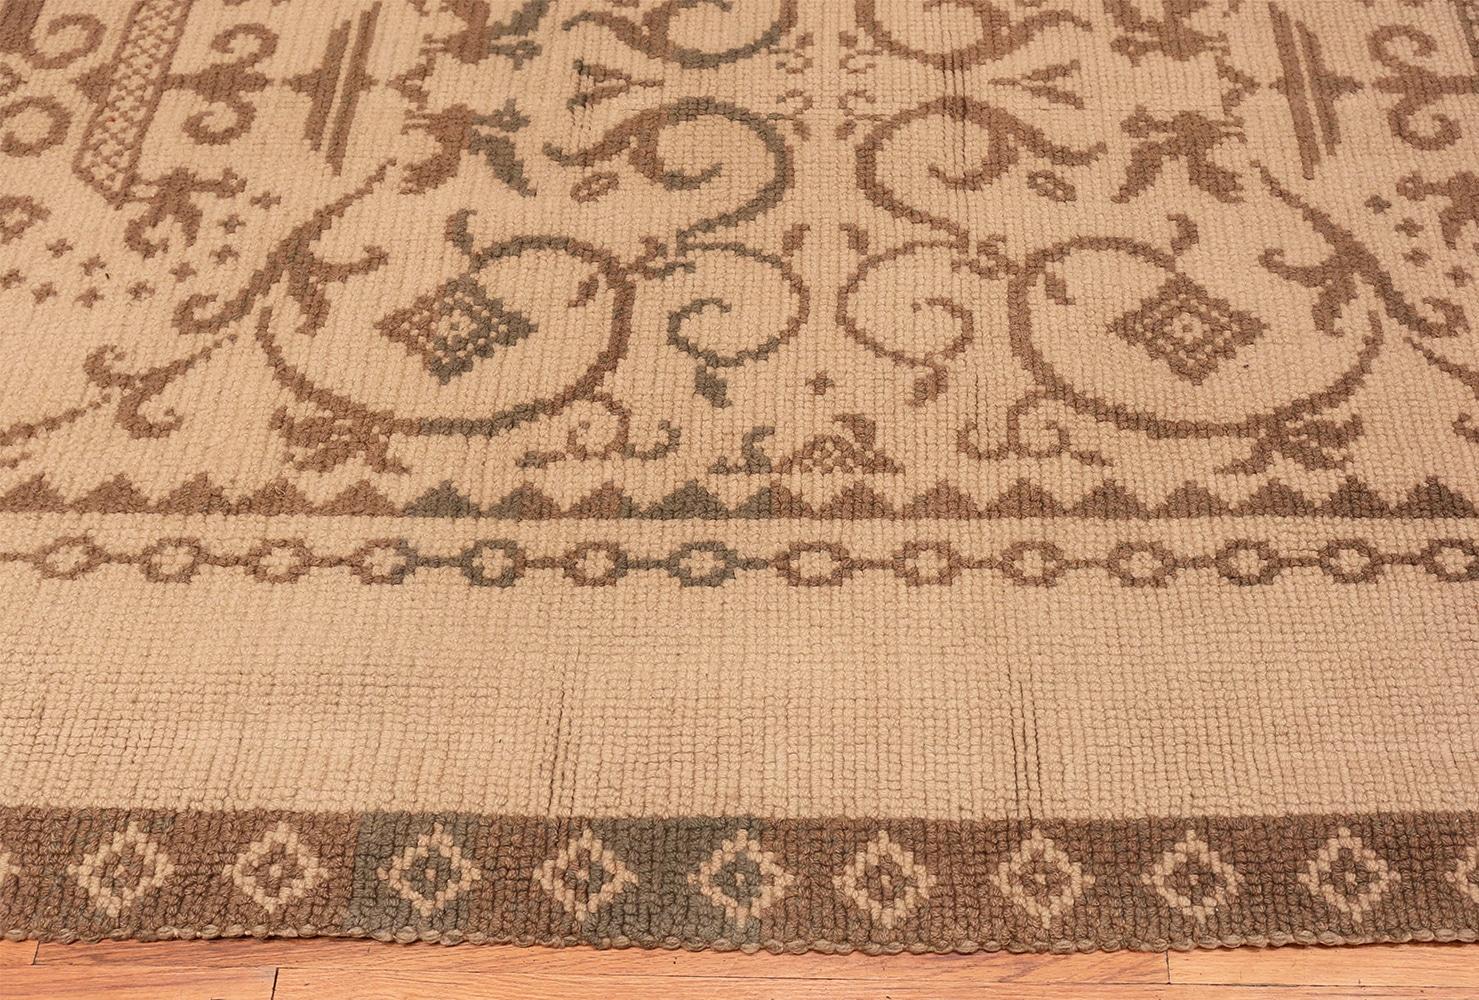 Vintage Alpujarra rug, Origin: Spain, circa mid-20th century– Size: 12 ft x 18 ft (3.66 m x 5.49 m).